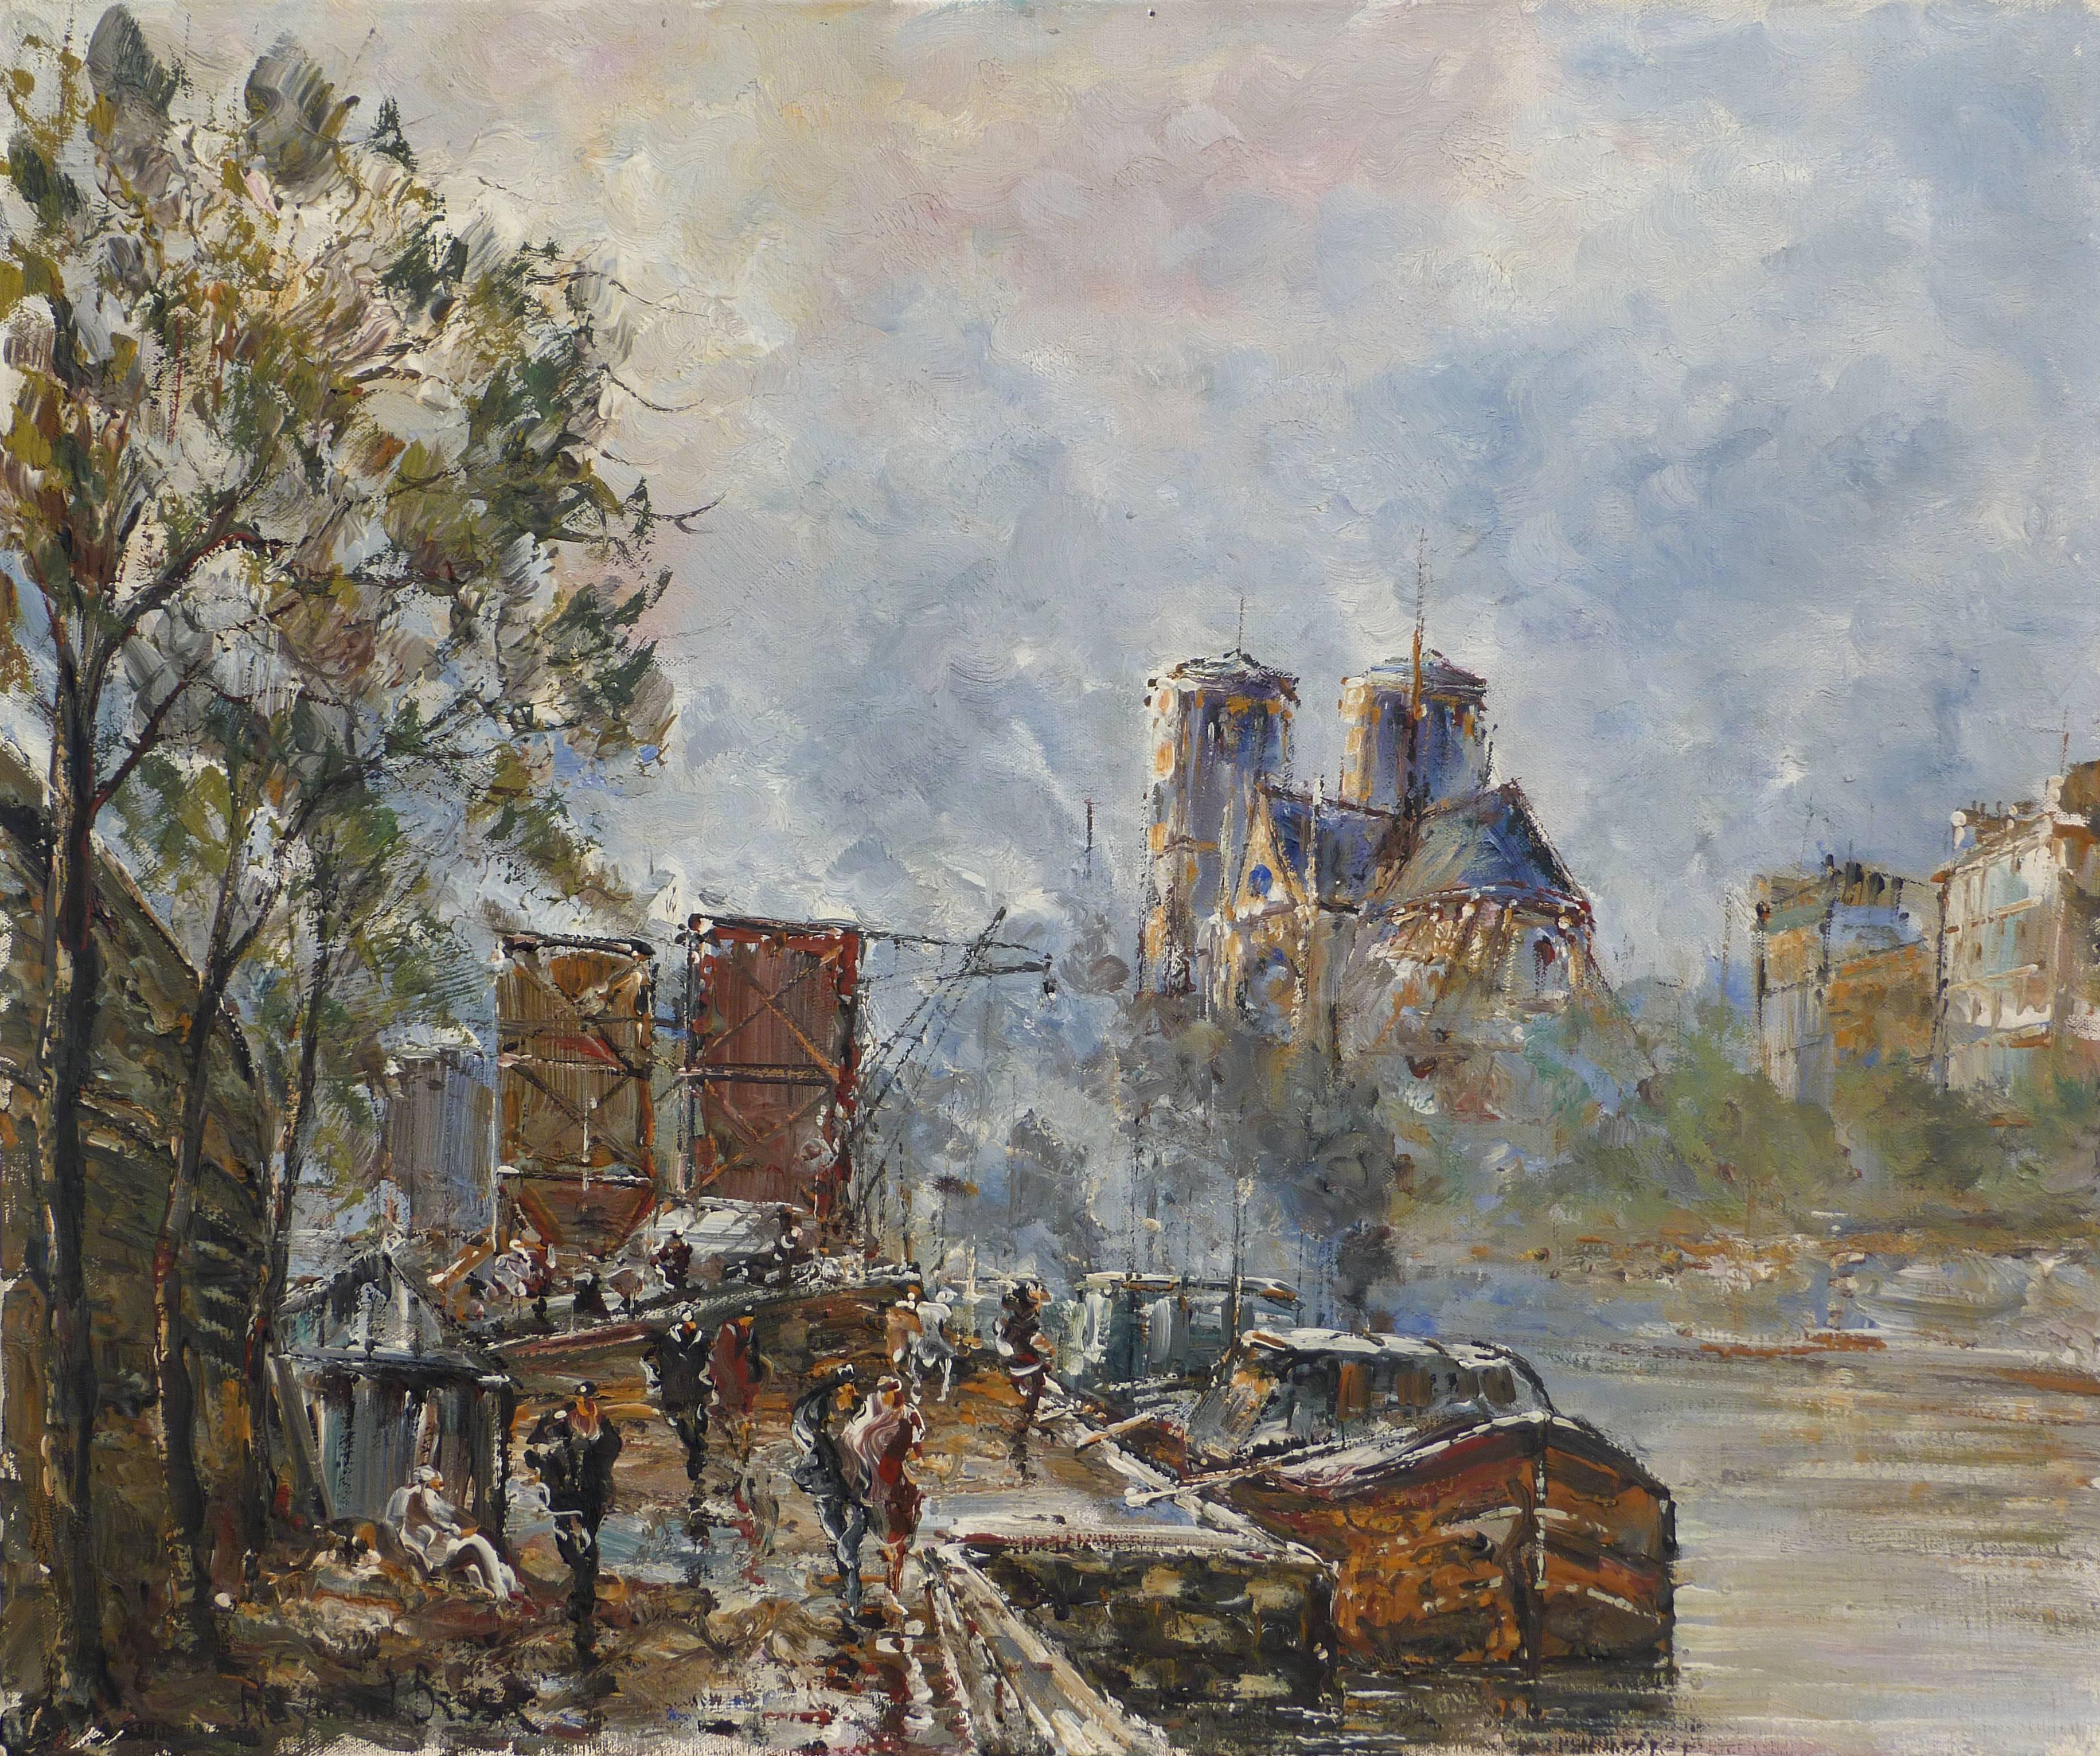 Raymond Besse Landscape Painting - The old Paris, The Seine River, the Bridge at the Seaport St Bernard